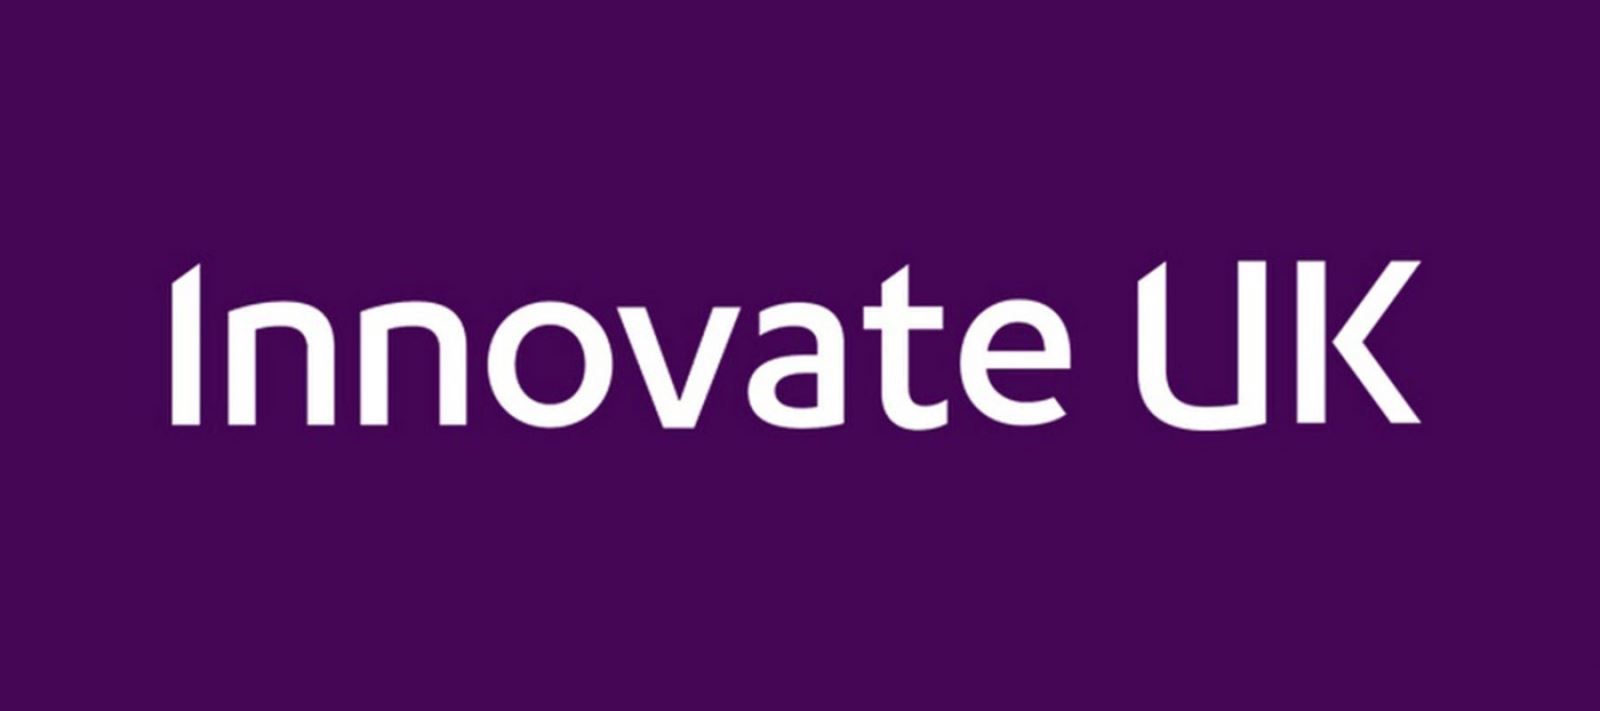 Innovate_UK_logo_16_9-1800x800-1